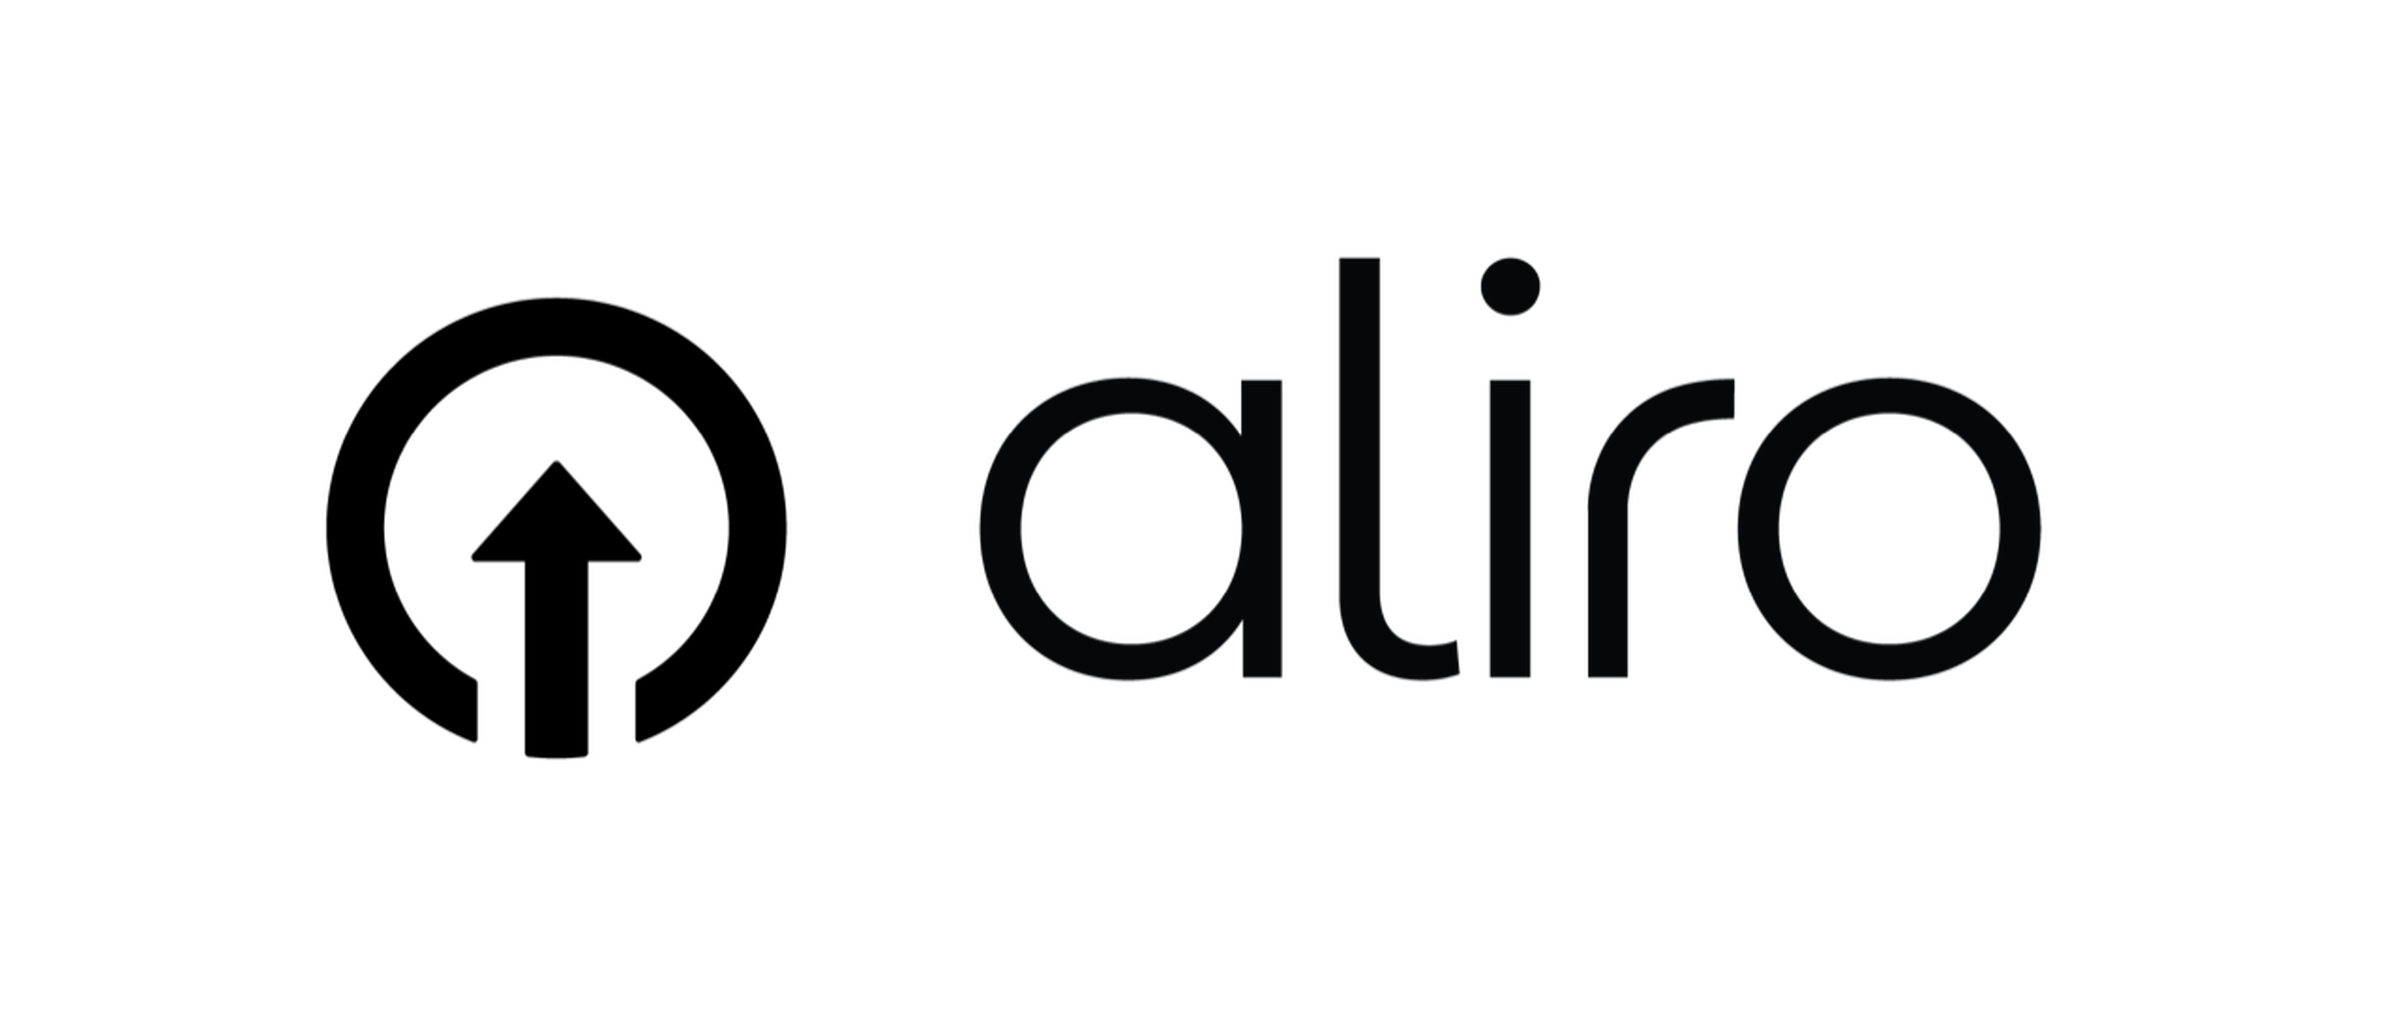 Aliro stands for “access’ in the international second language Esperanto.